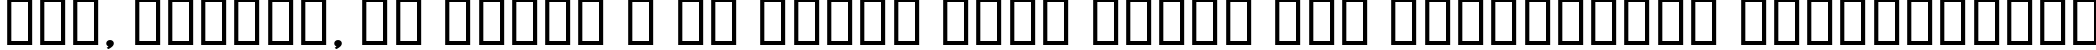 Пример написания шрифтом B Jadid Bold текста на украинском